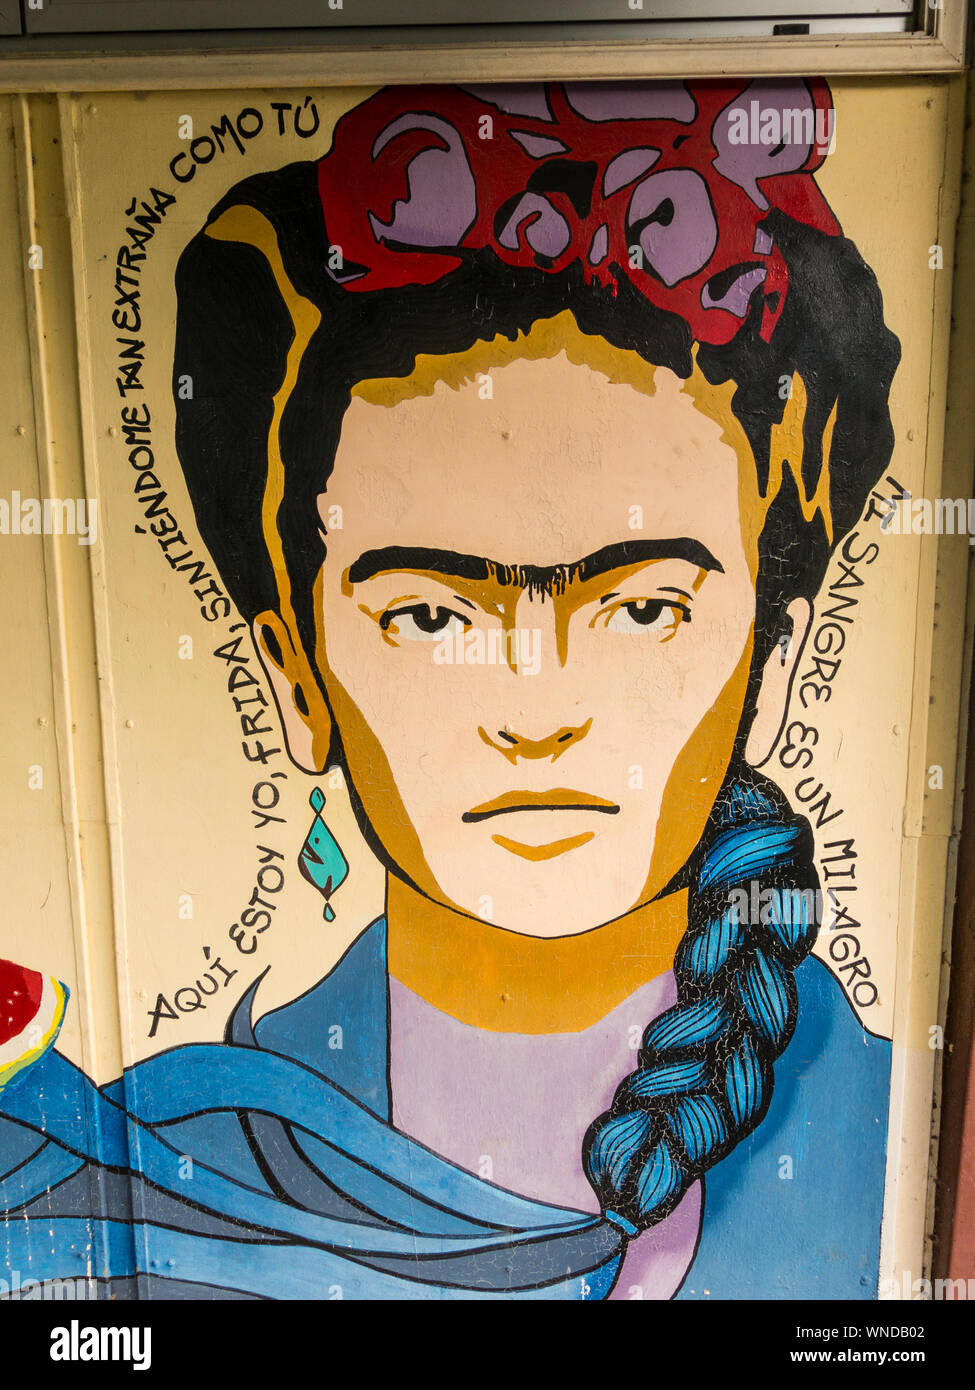 Valdivia, Chile - January 12, 2019: Graffiti in honor Frida Kahlo at the Universidad Austral de Chile in Valdivia city. The Spanish text says: 'Here I Stock Photo